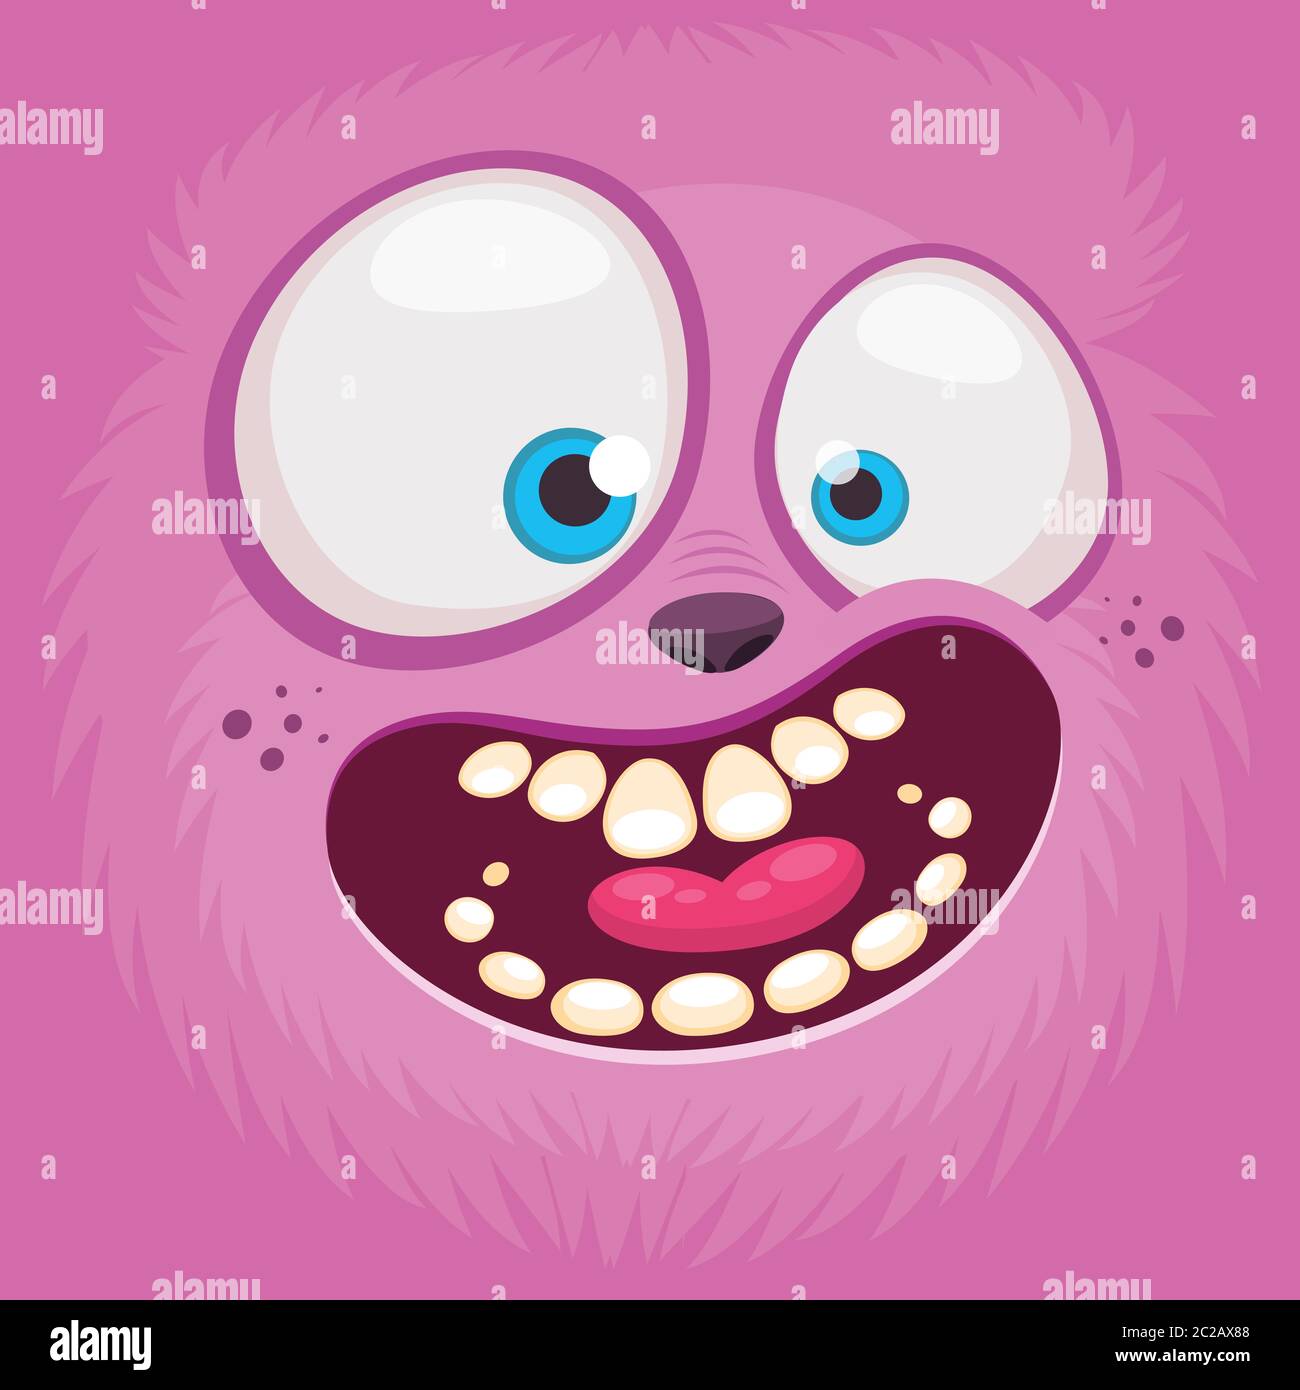 Monsters face cartoon creature avatar illustration vector stock ...